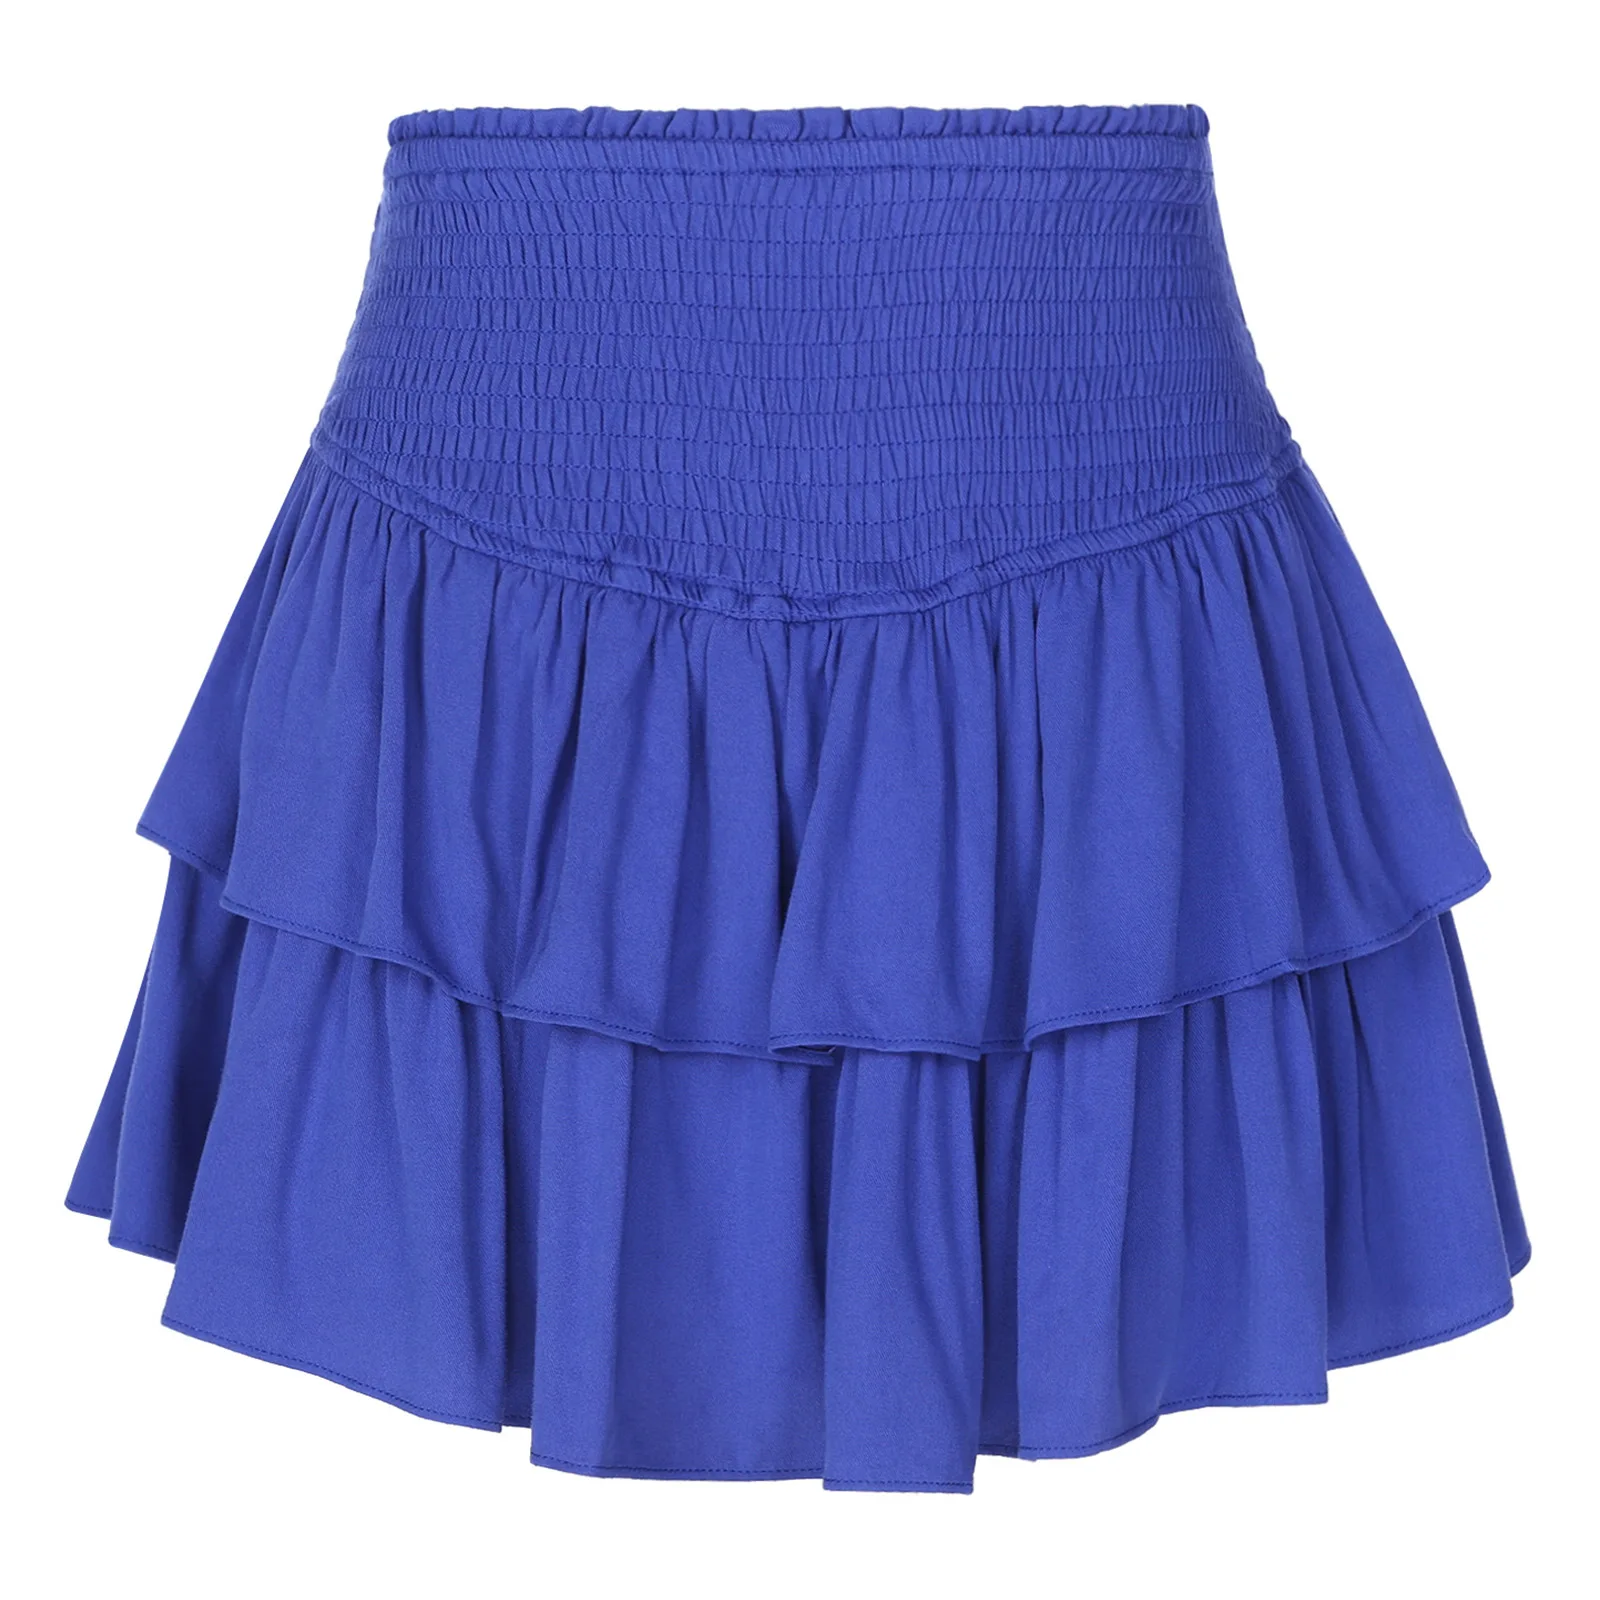 

Casual Women Lady Basic High Waist Ruffle Skirts Elastic Waistband Skirts Built-In Shorts Layered Miniskirt for Beach Club Party